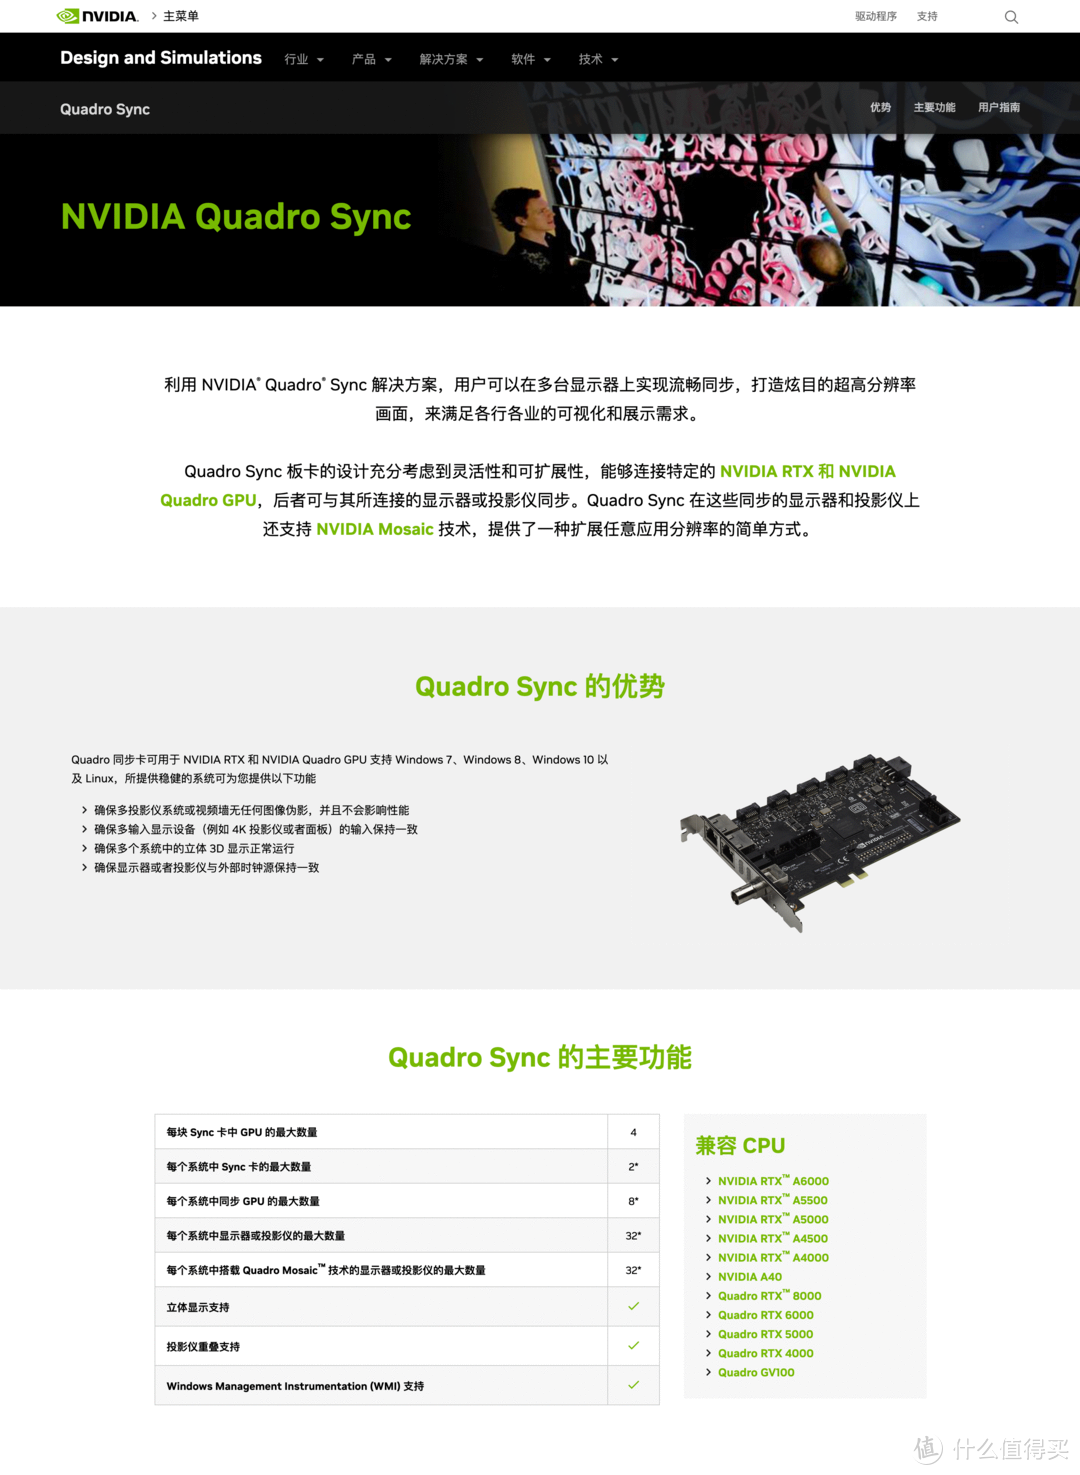 【16 - NVIDIA Quadro Sync】